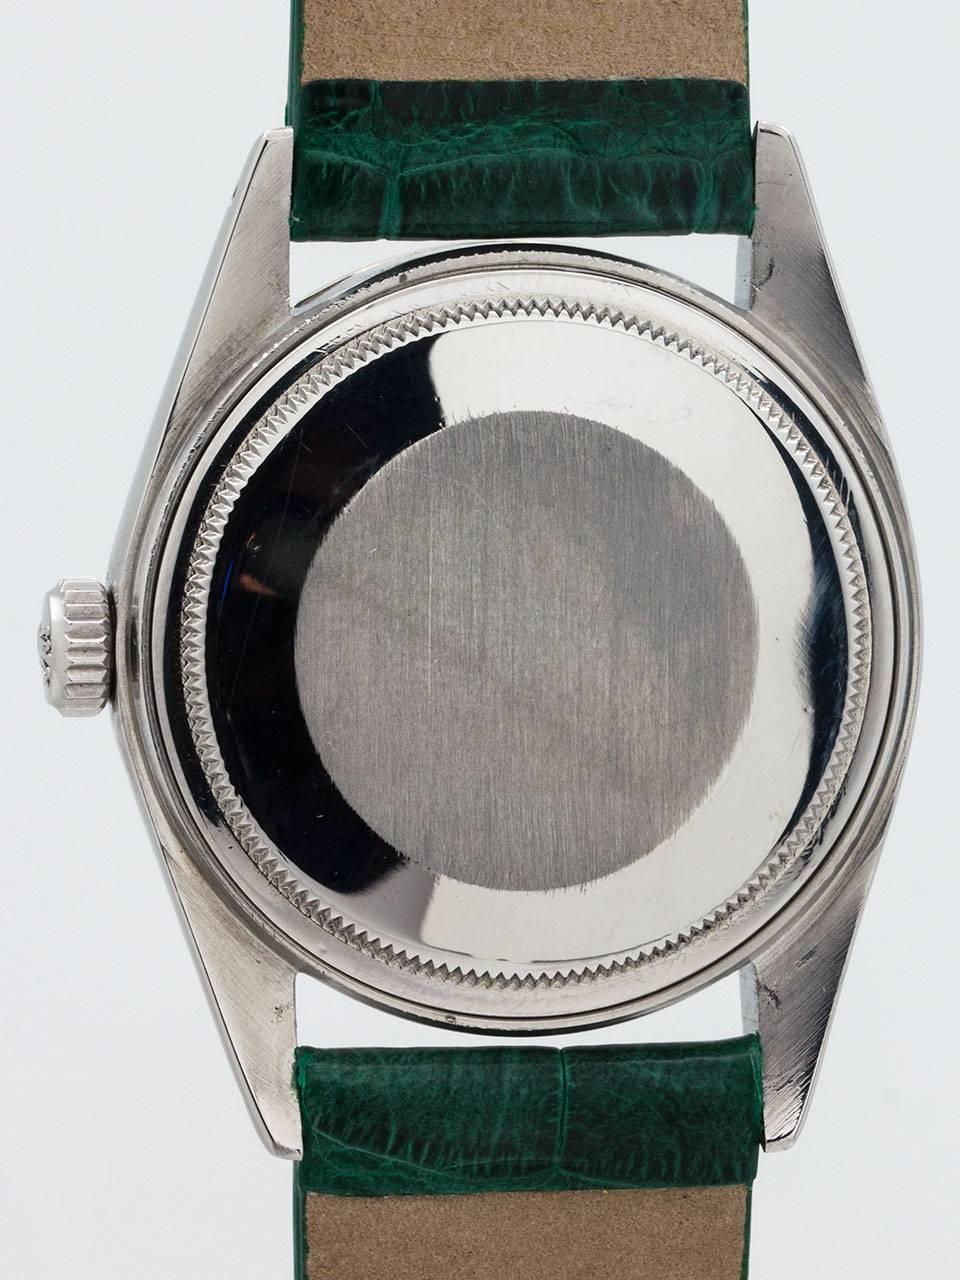 Women's or Men's Rolex Stainless Steel Datejust Wristwatch Ref 1601 1974 For Sale